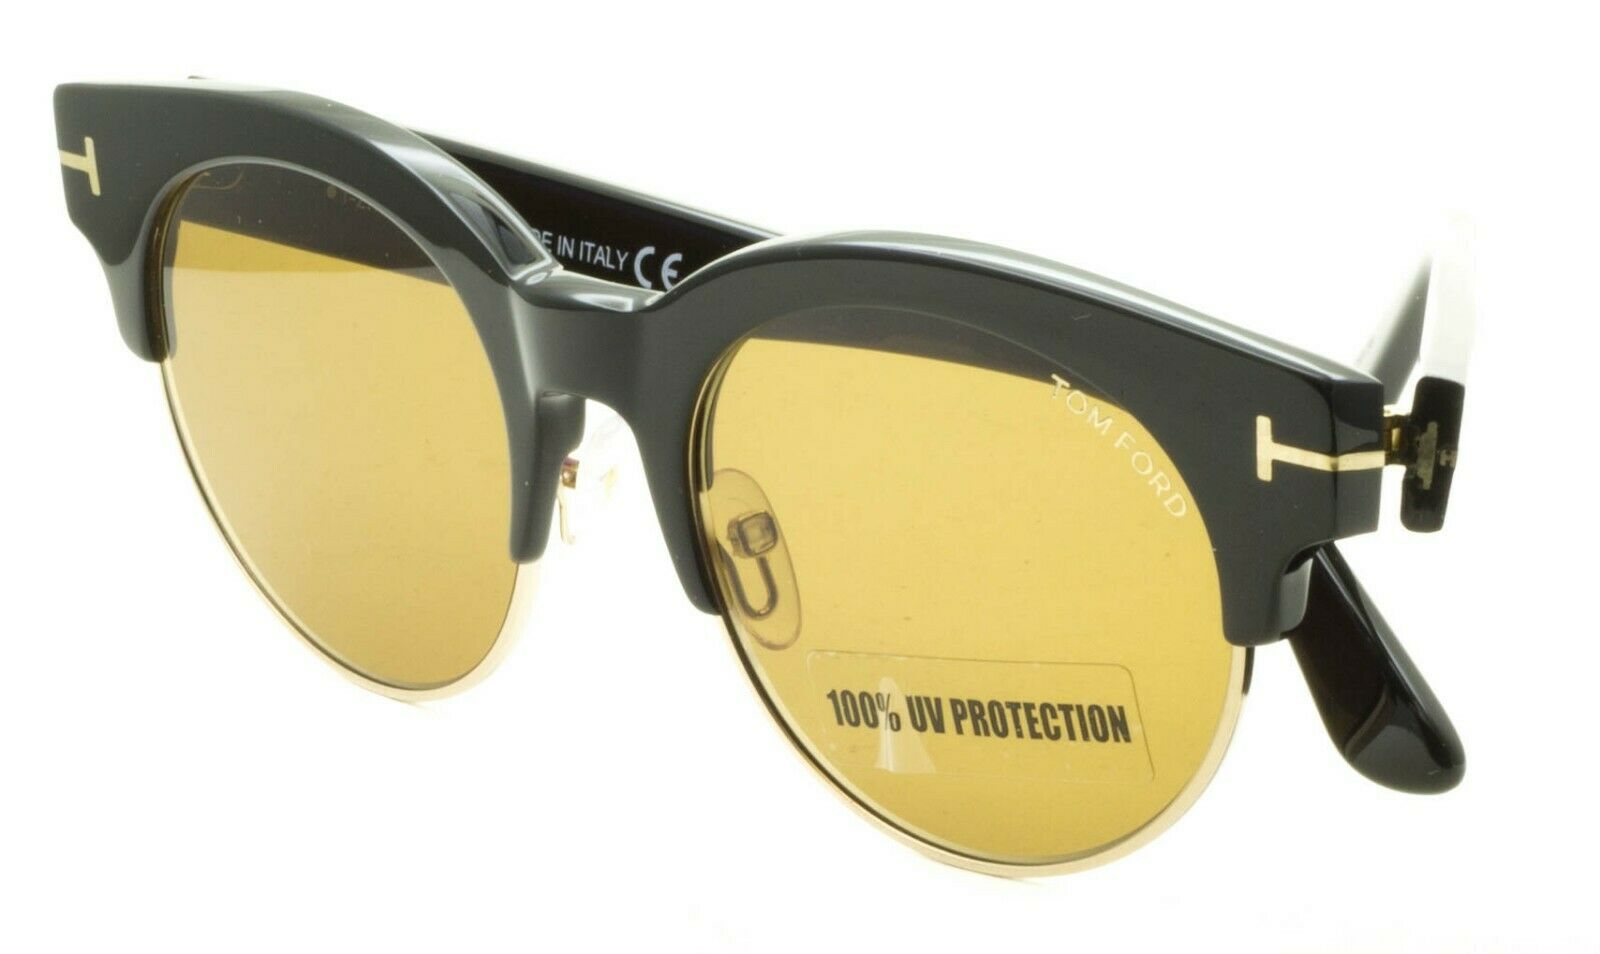 TOM FORD TF 598 01E Henri-02 52mm Eyewear SUNGLASSES Glasses Shades NEW - Italy